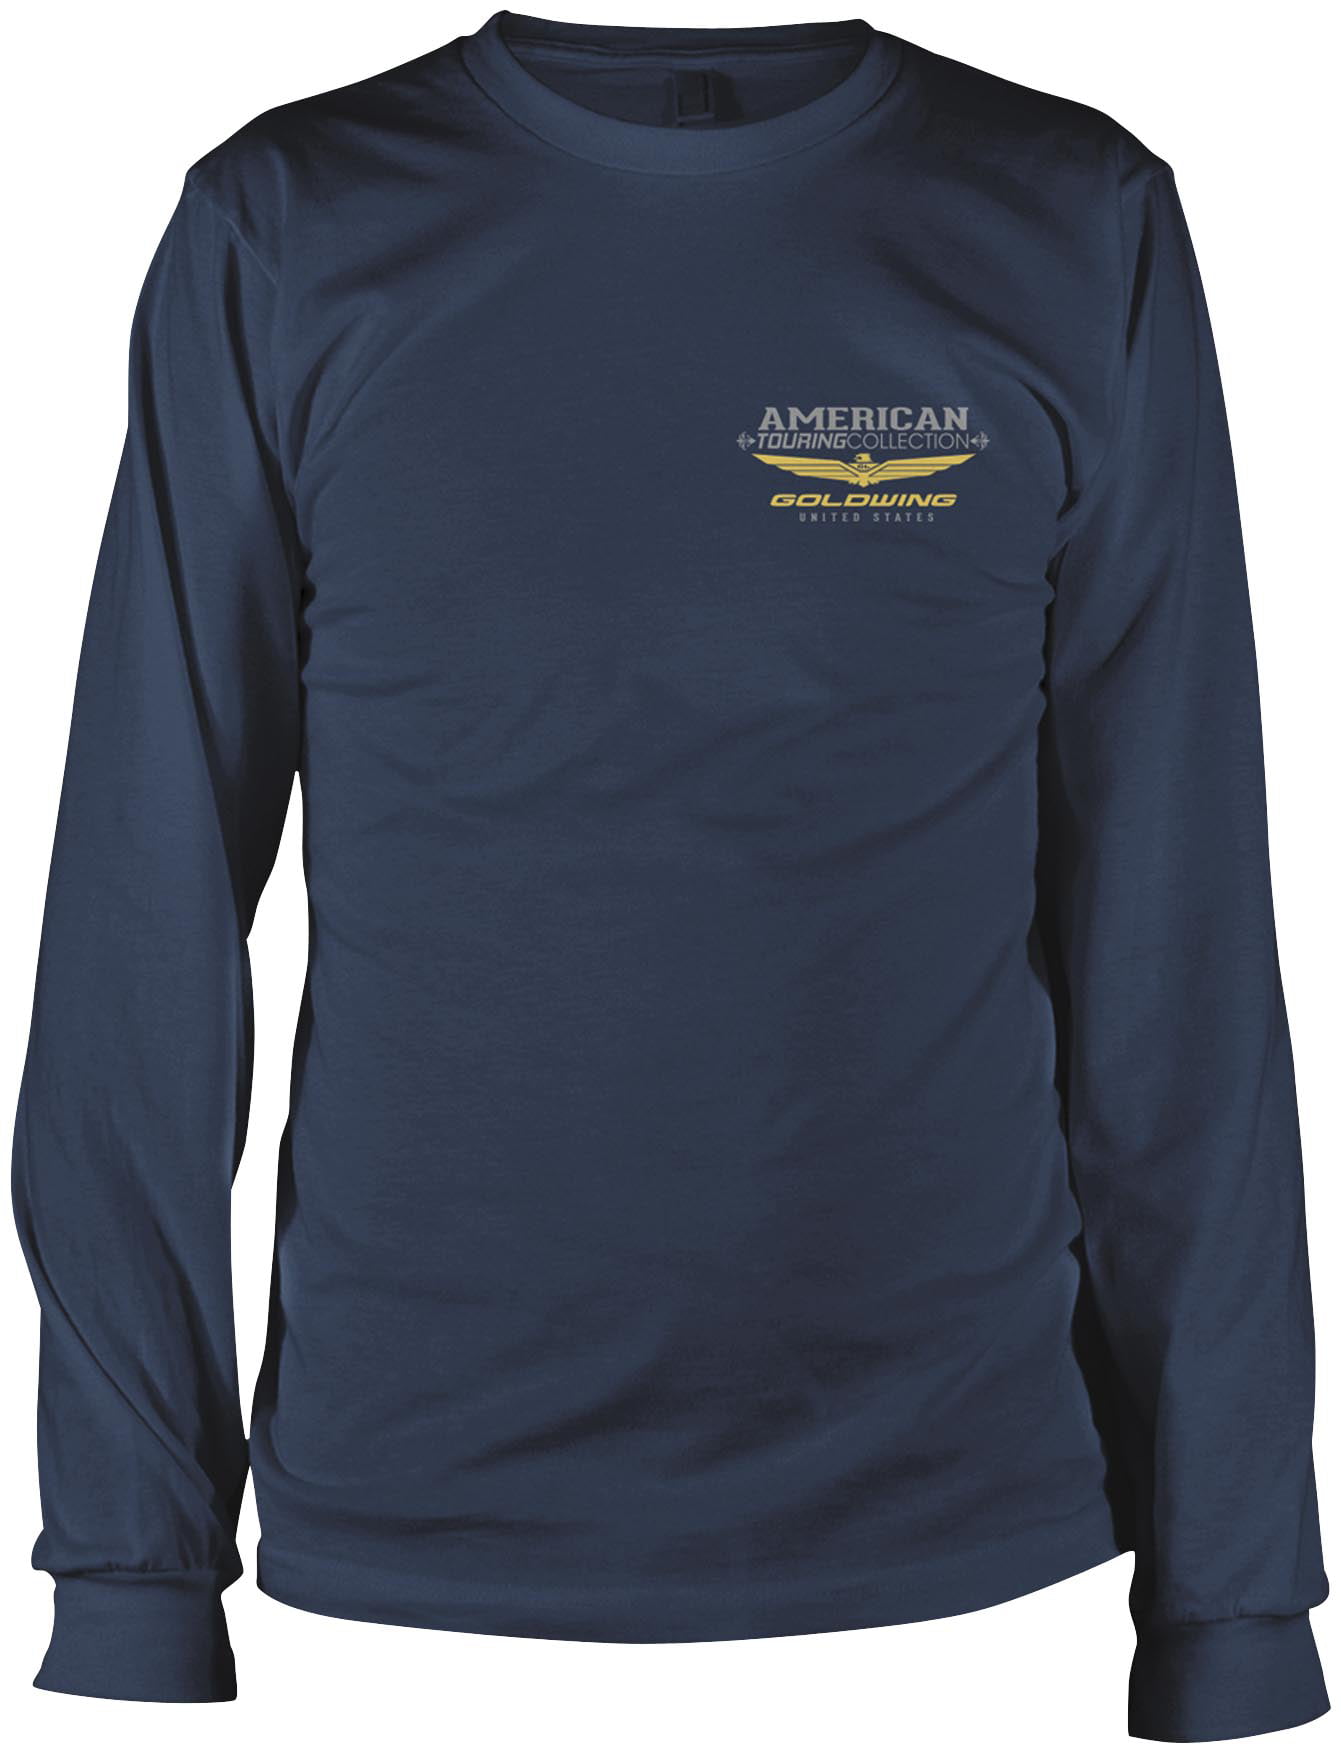 for Collection Wing Long Sleeve T-Shirt (Medium, Blue Navy) Walmart.com